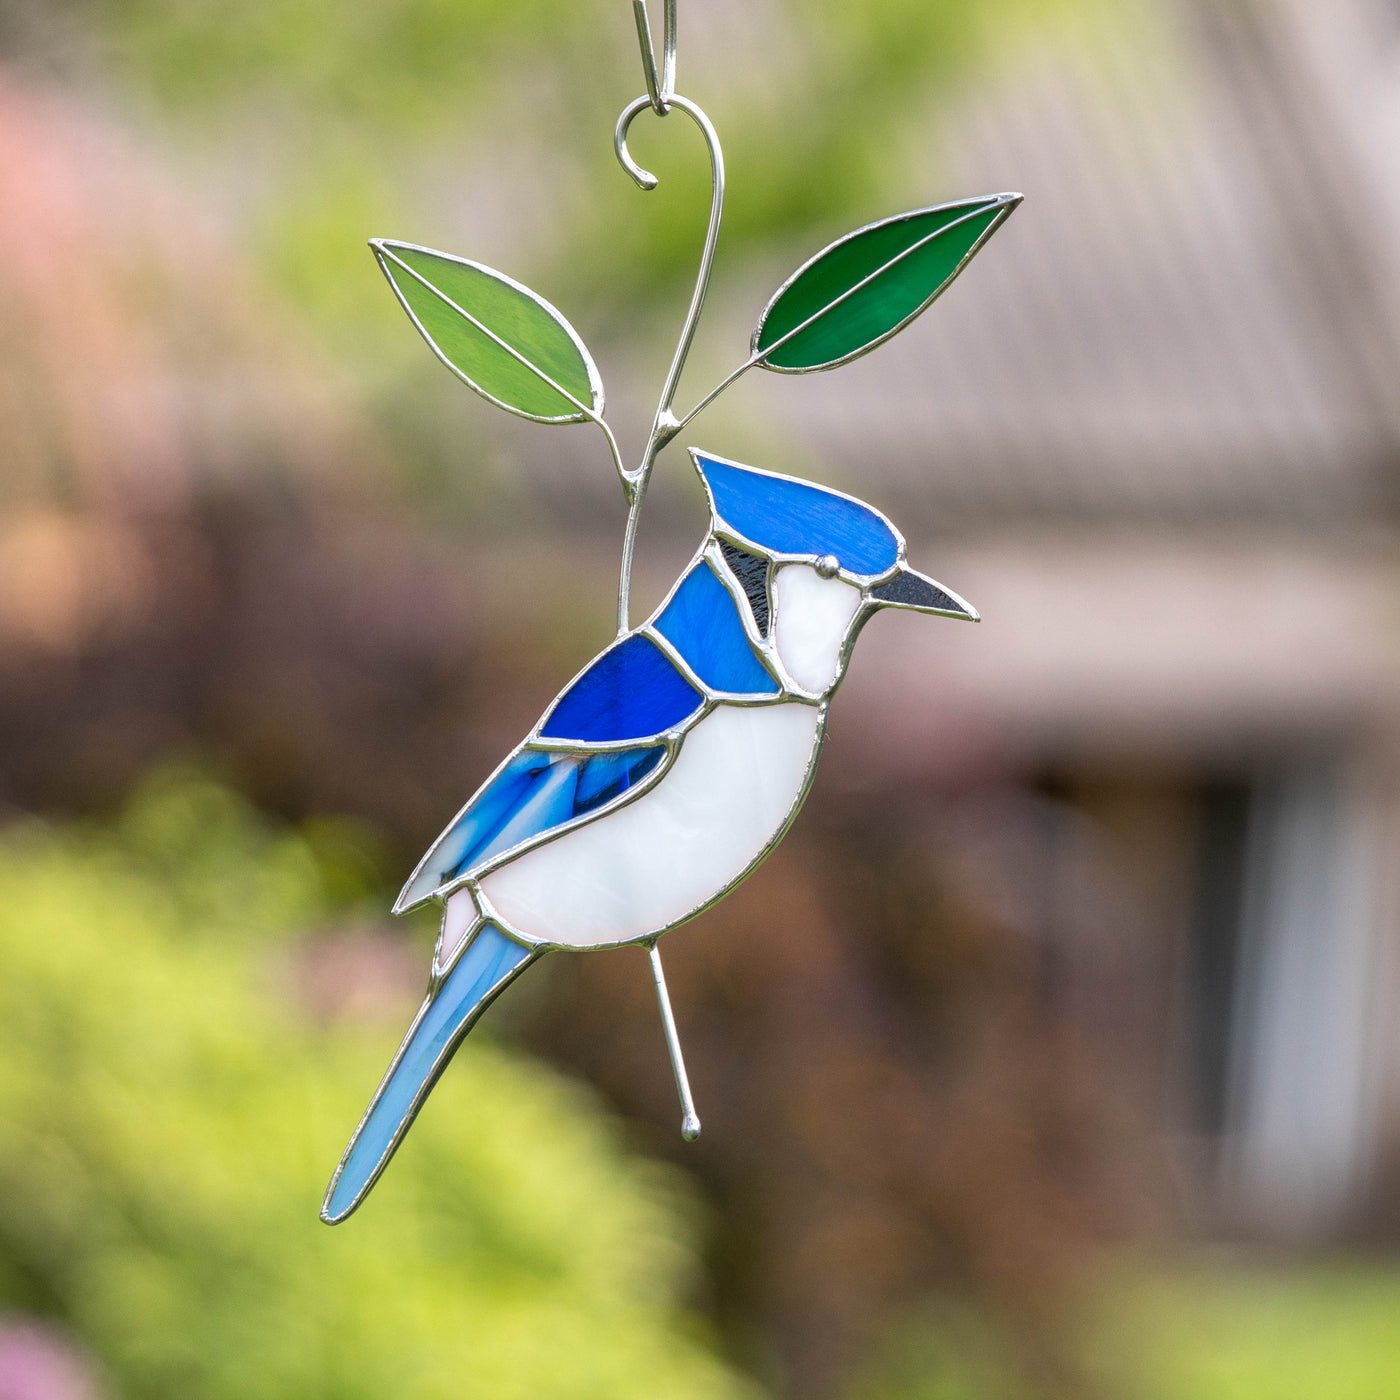 Stained glass suncatcher of blue jay bird